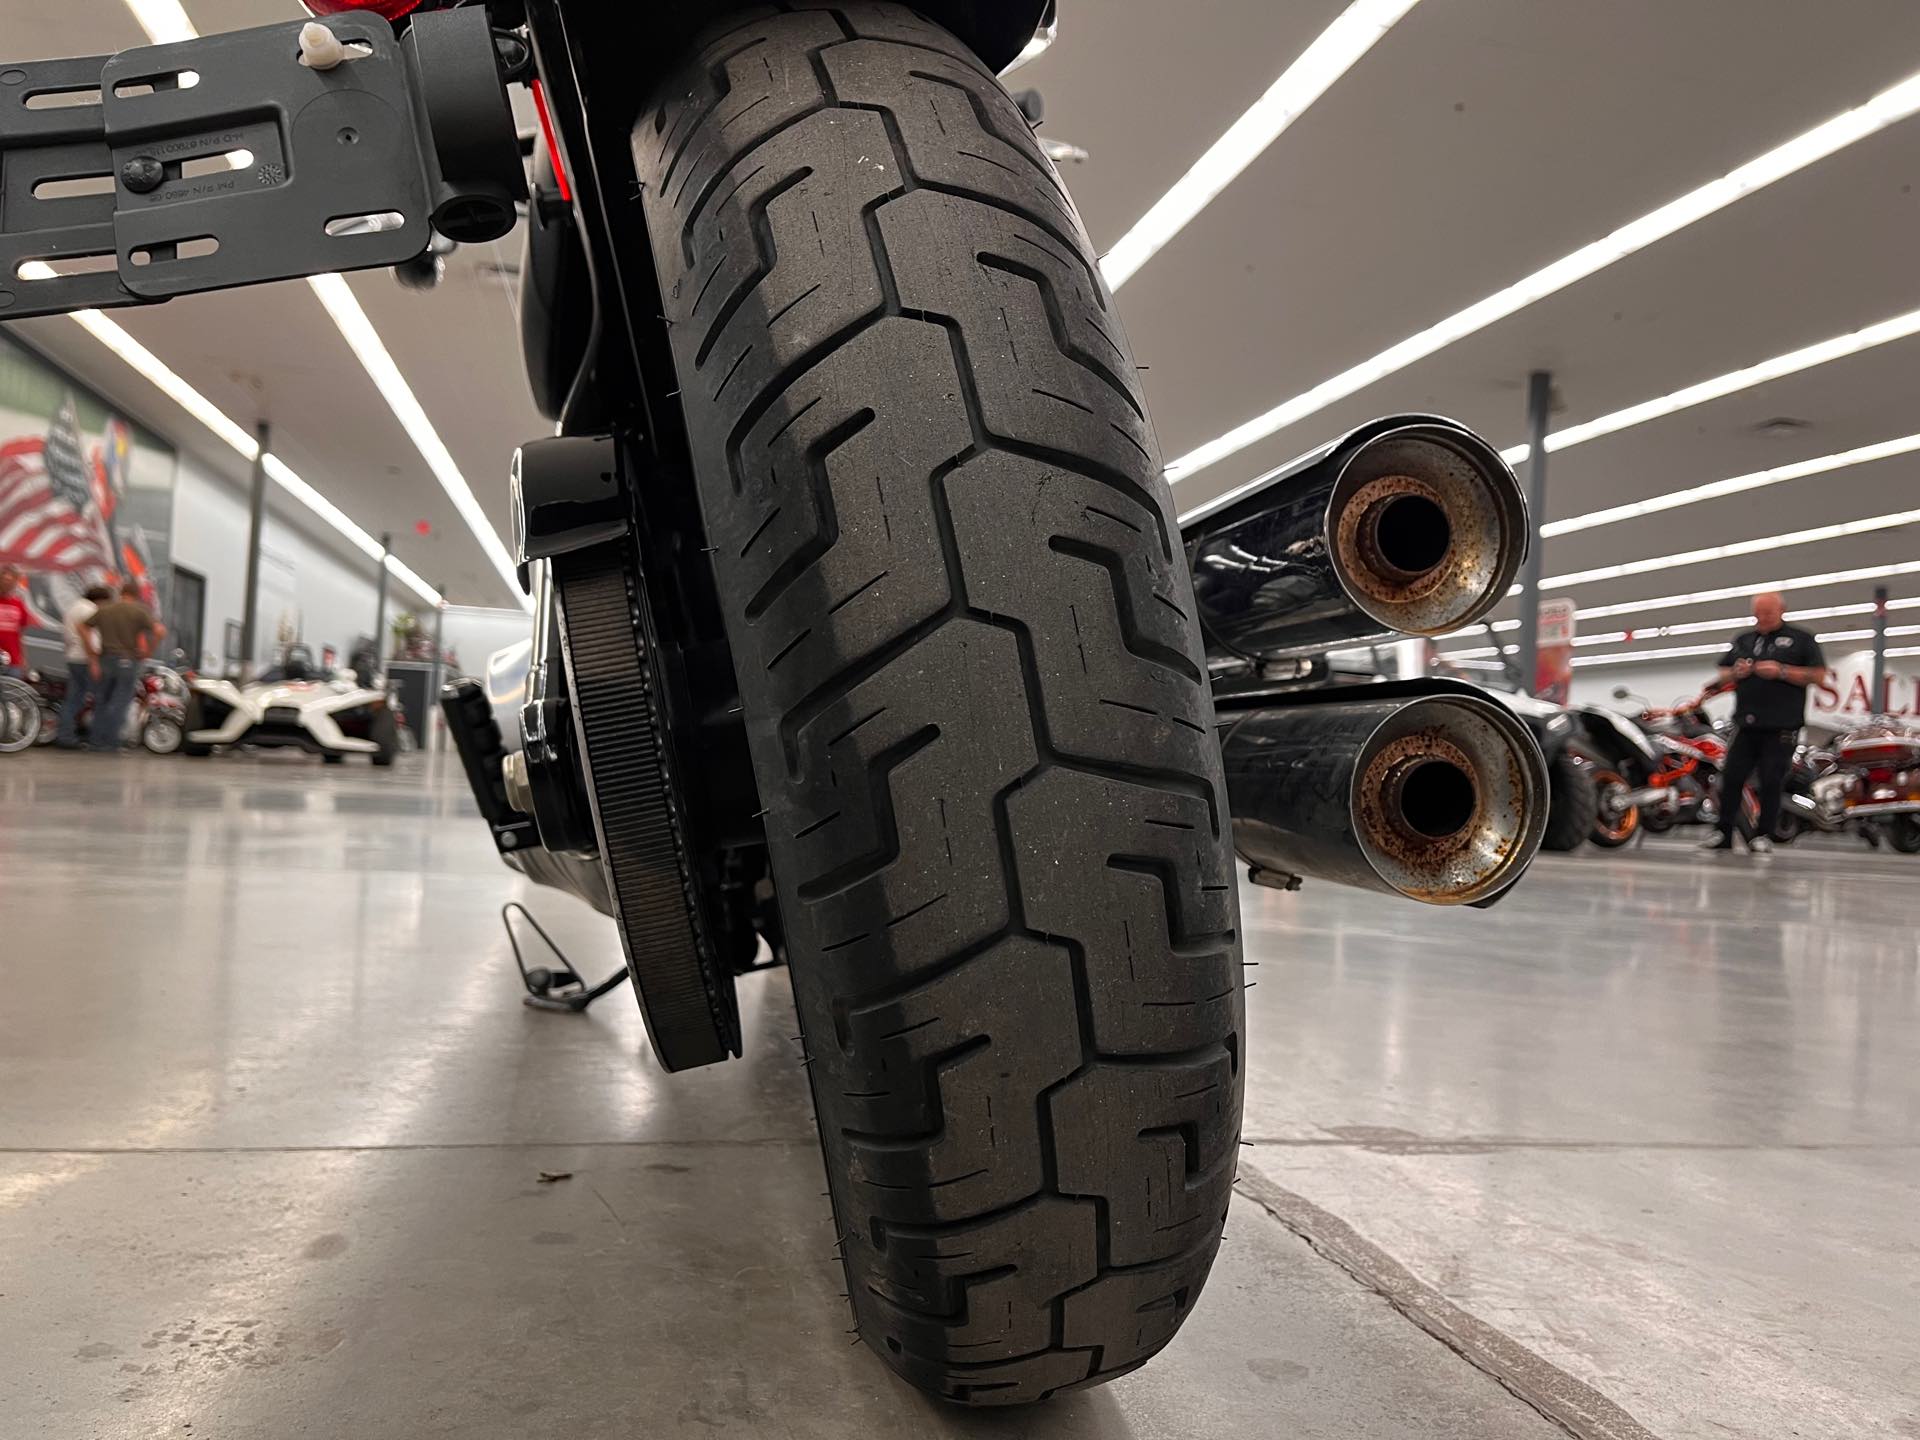 2018 Harley-Davidson Softail Slim at Aces Motorcycles - Denver